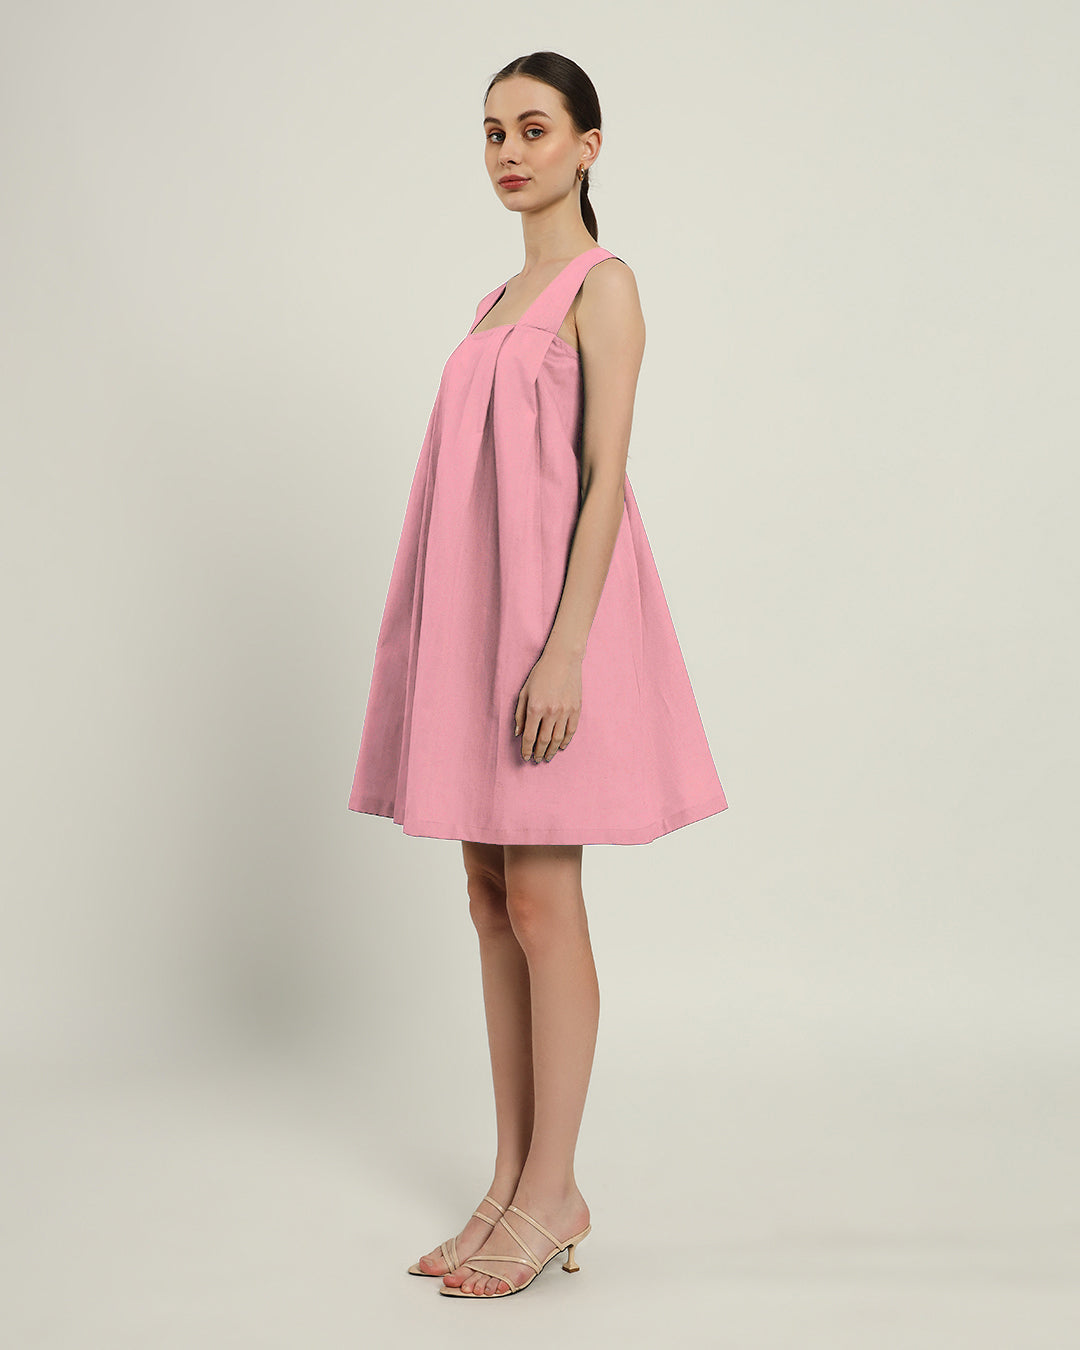 The Larissa Pink Mist Cotton Dress